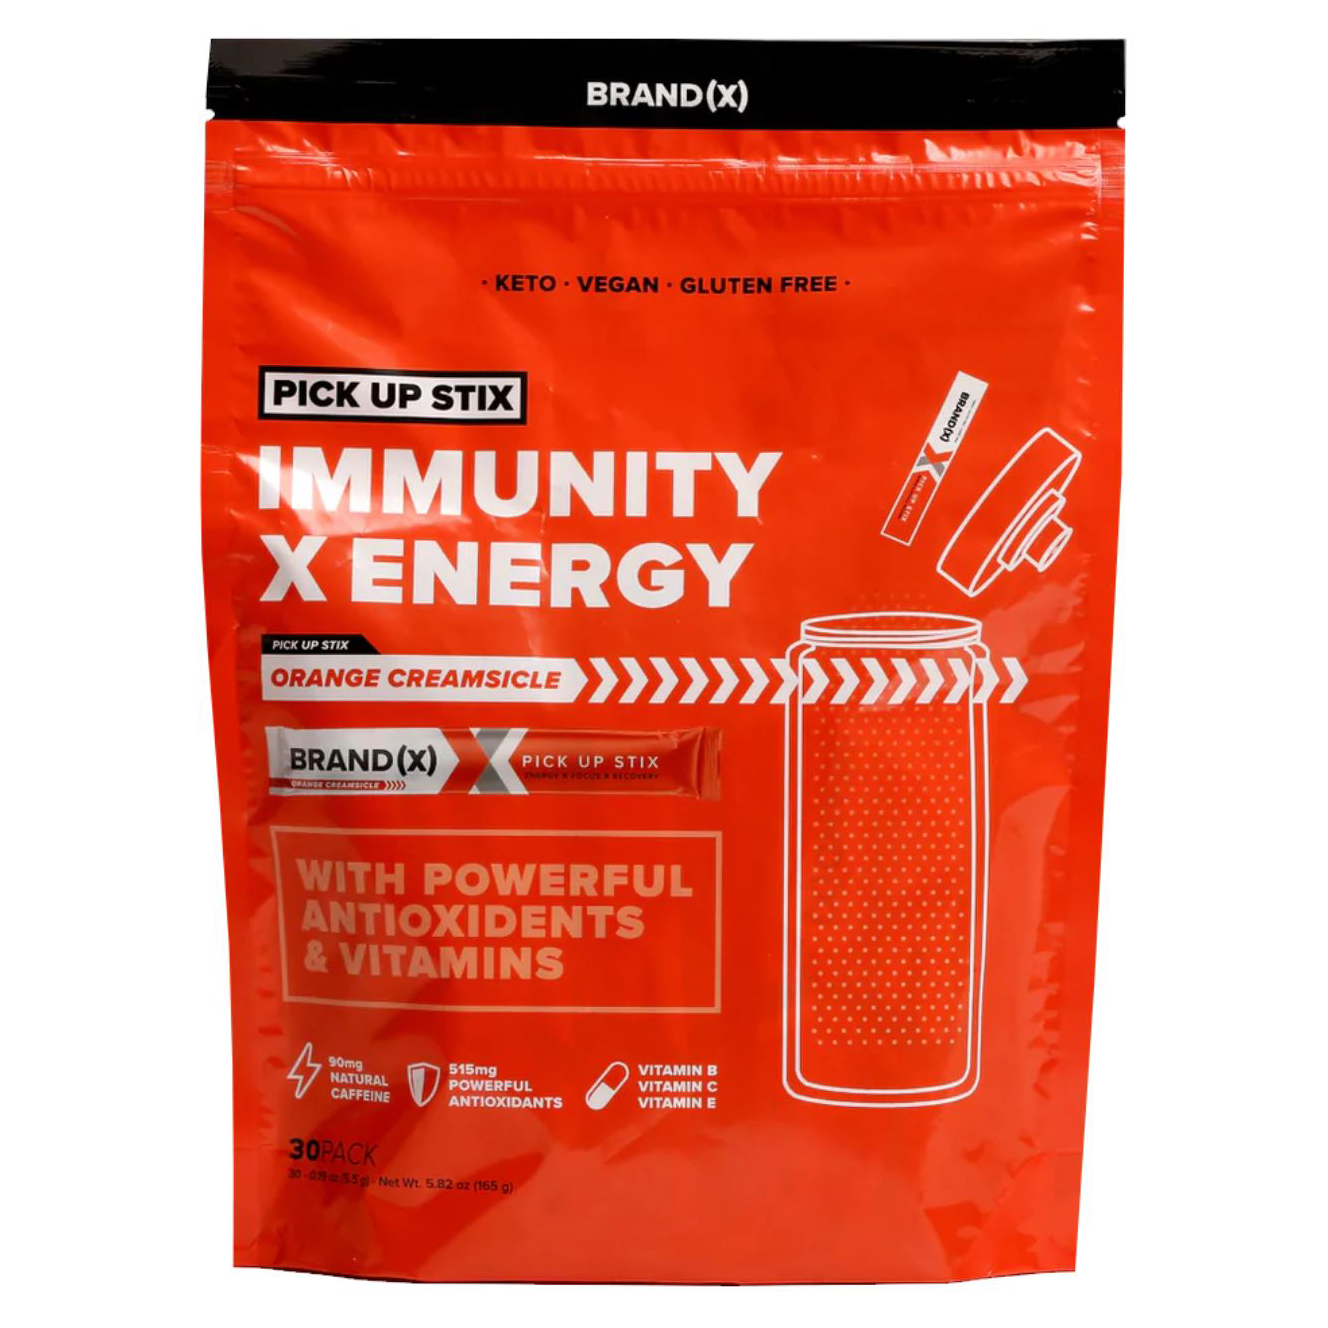 Brand(x) - Pick up stix immunity x energy bag